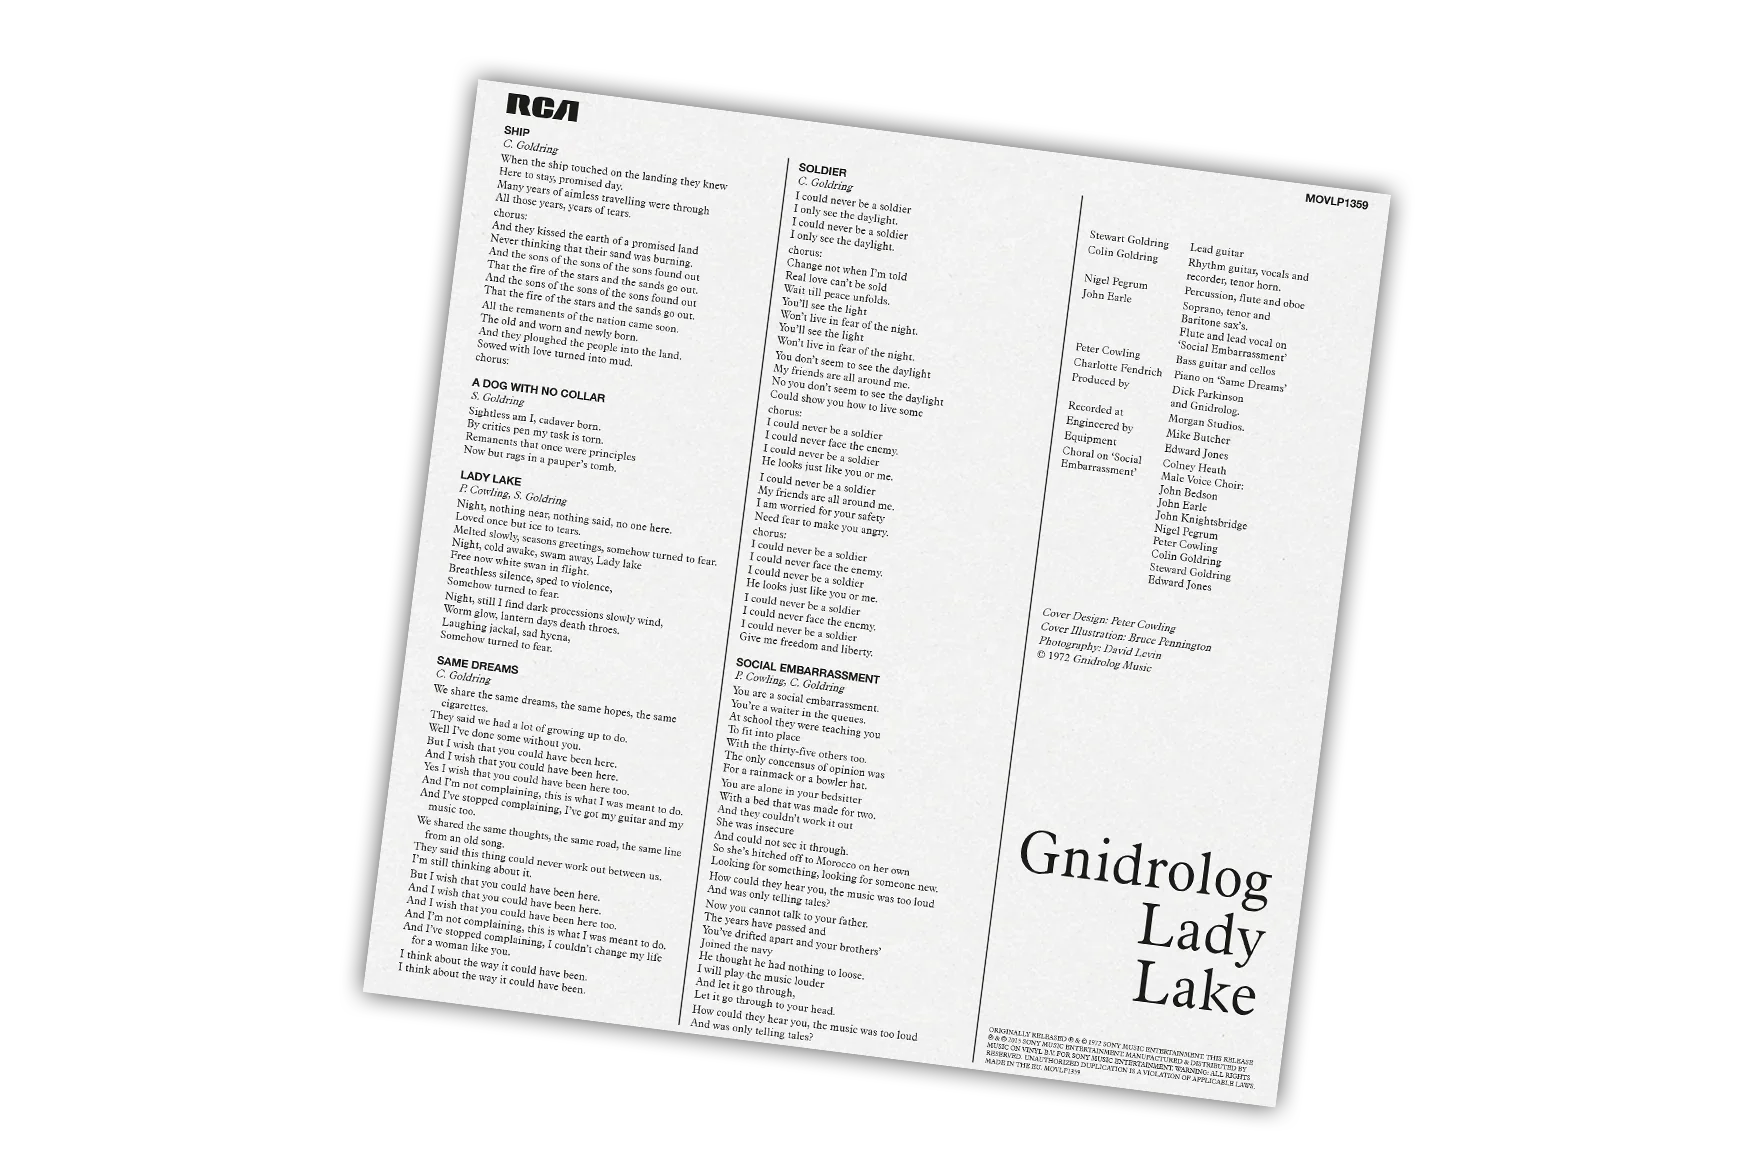 GNIDROLOG - Lady Lake (2024 Reissue) - LP - 180g Translucent Yellow Vinyl [JUN 14]